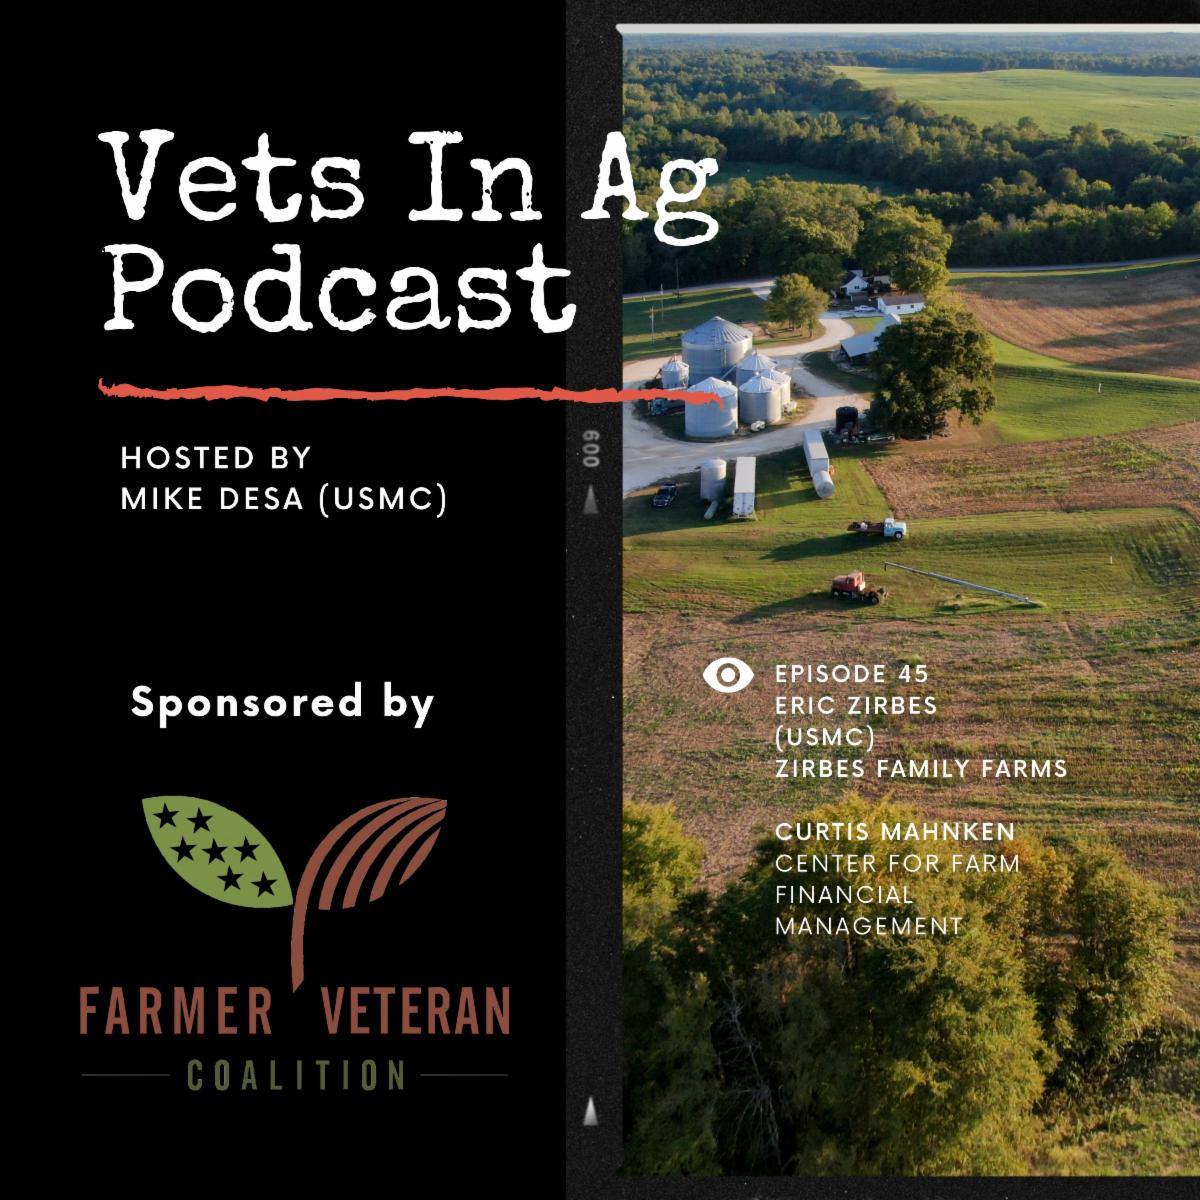 Vets in Ag Podcast Episode 45  